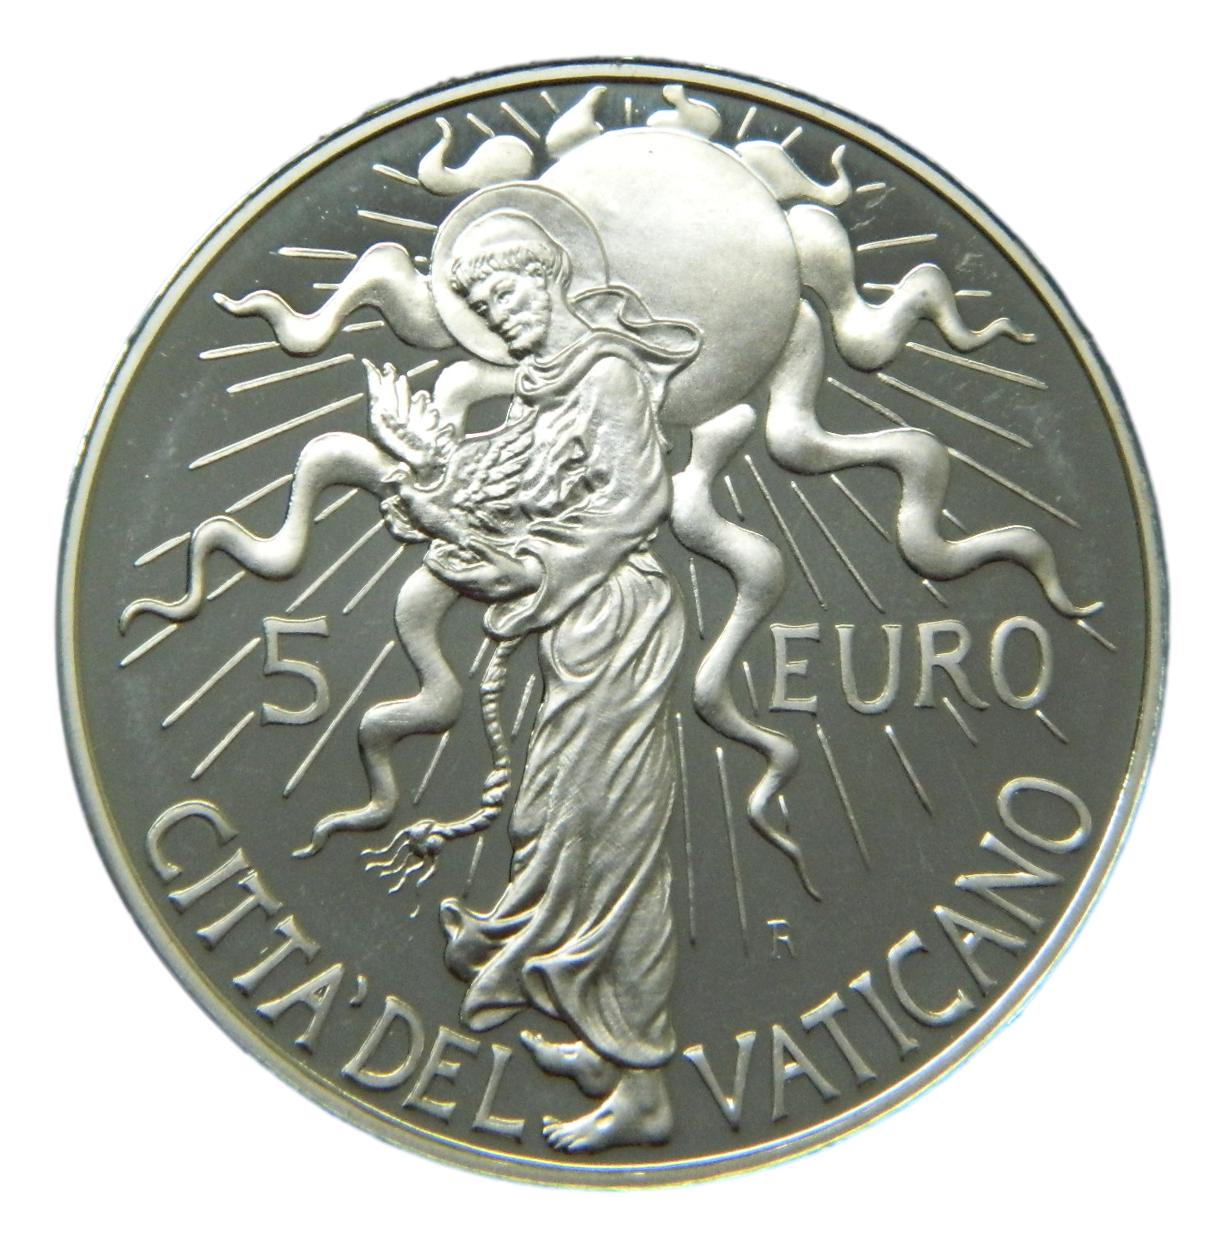 2007 - VATICANO - 5 EURO - BENEDICTI XVI - PLATA